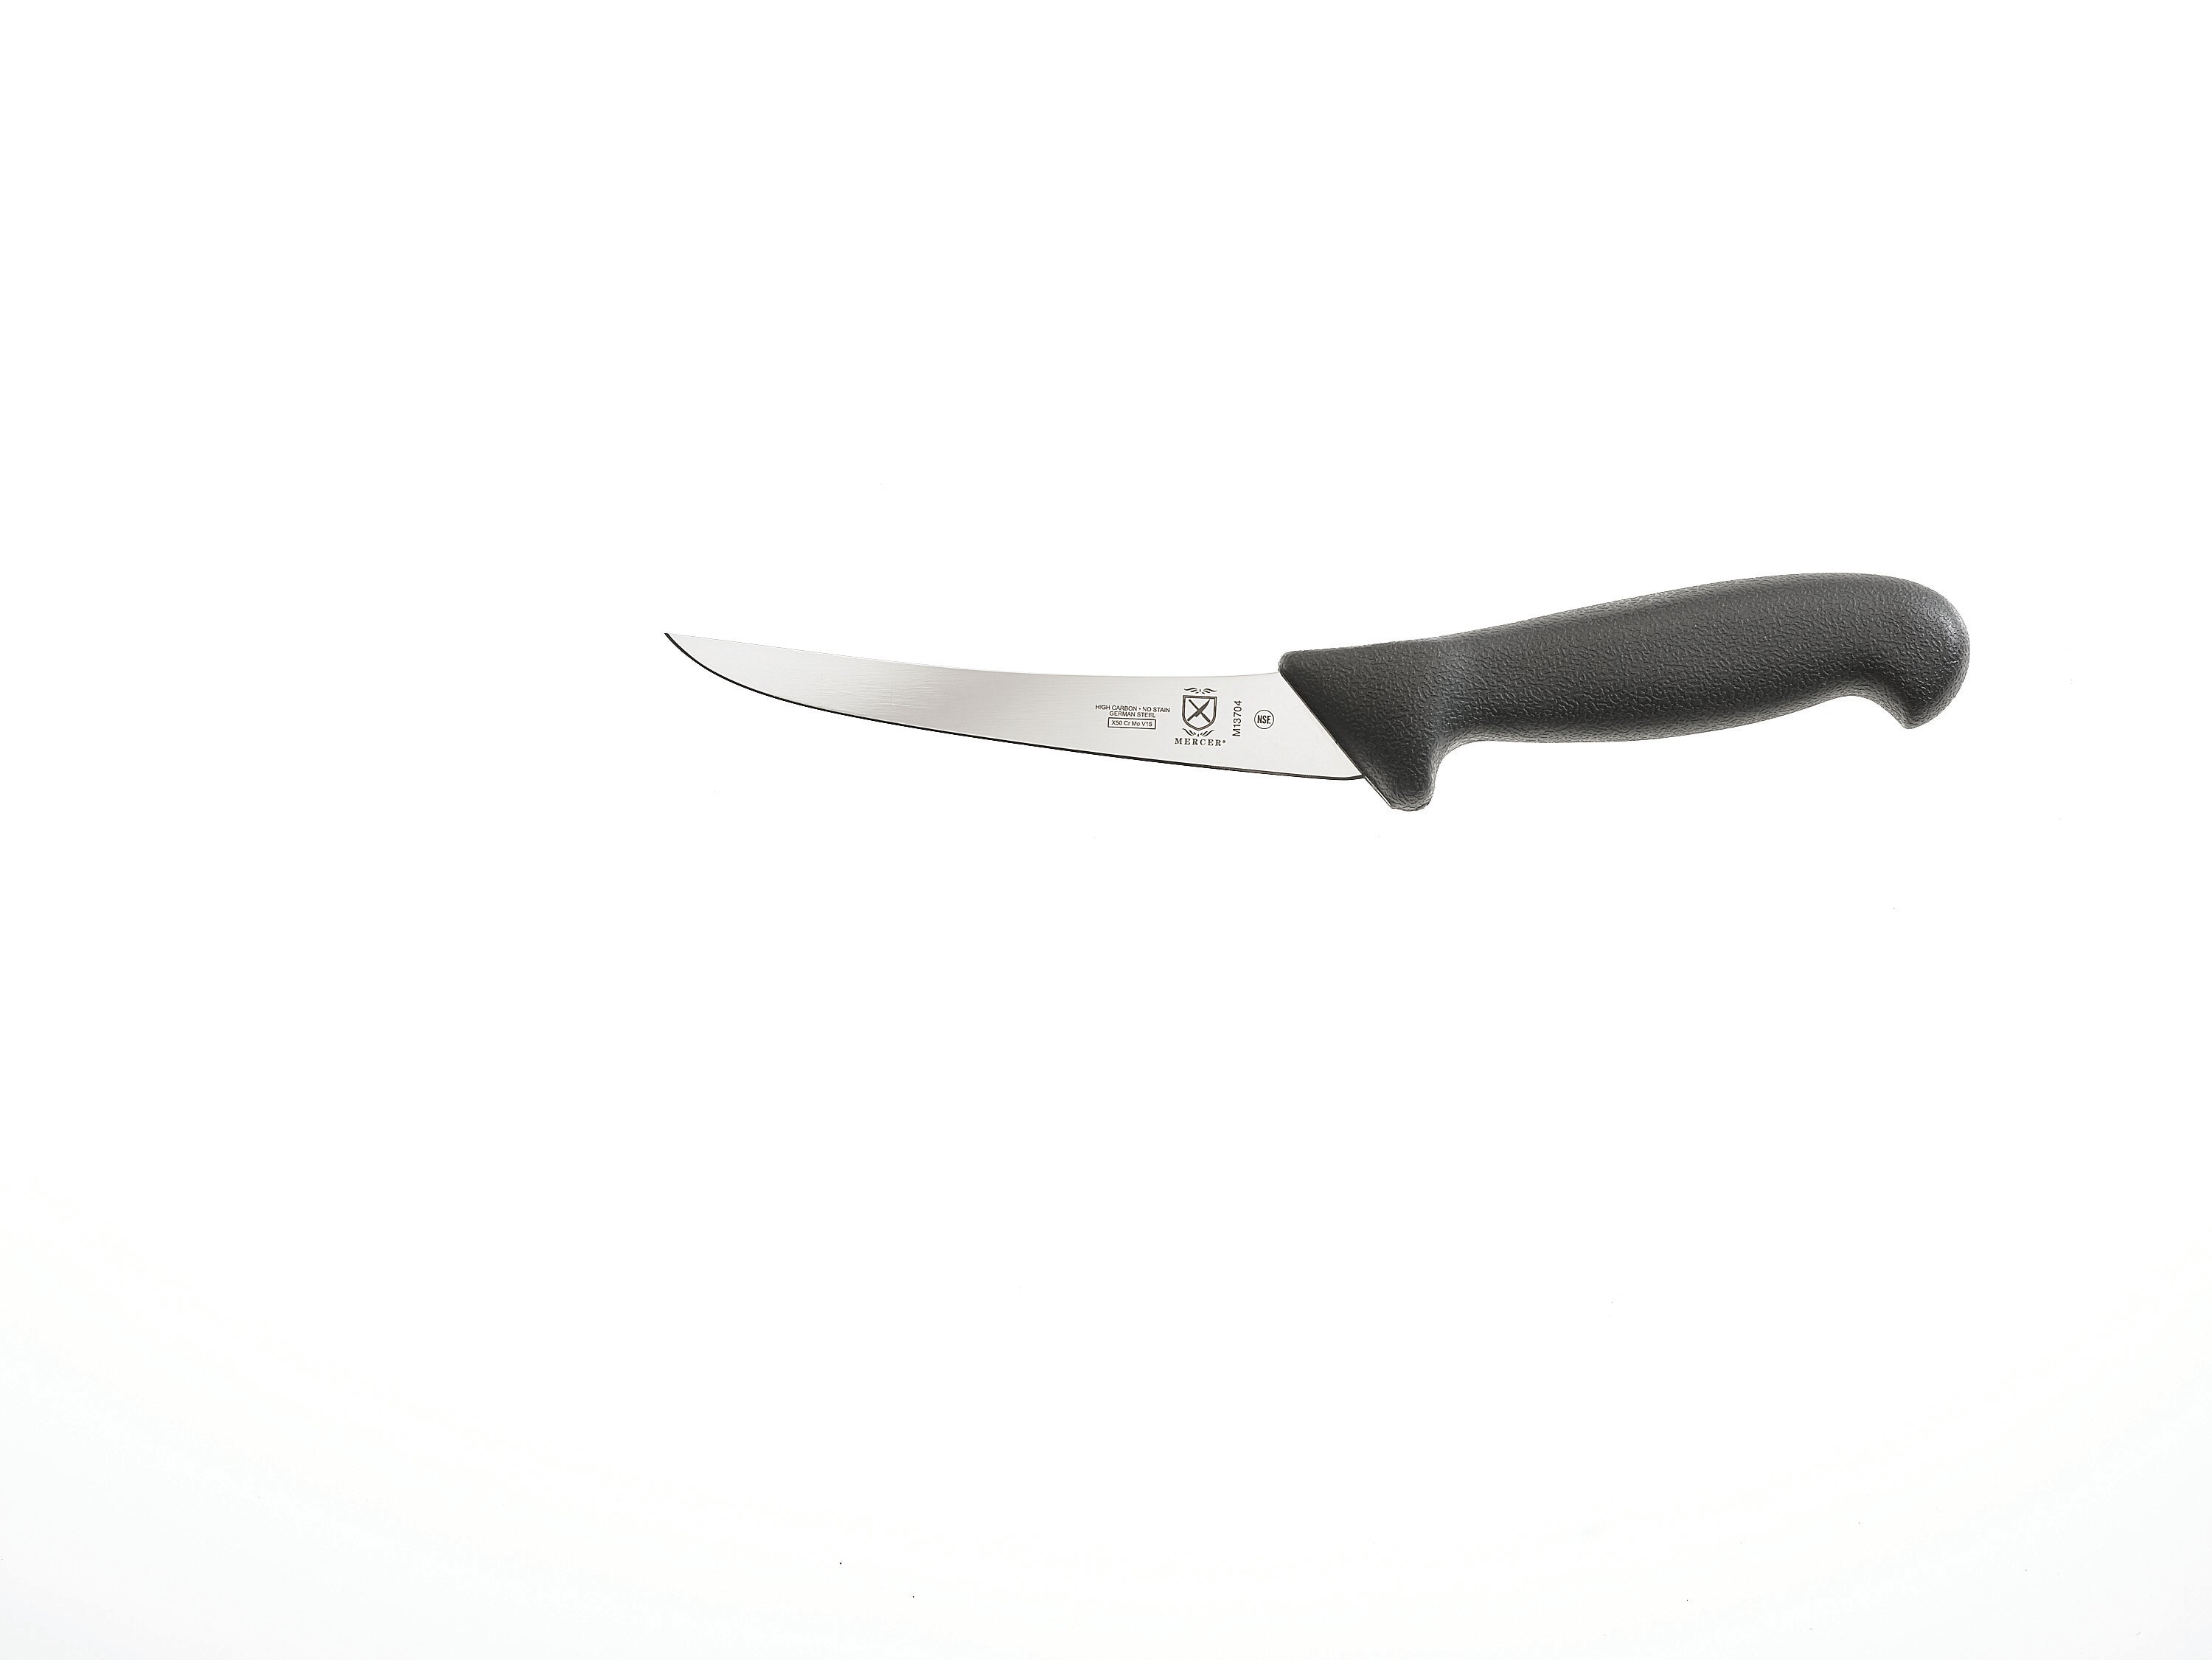 Fishing Knife 5.9" Curved Boning Knife - Semi Flexible